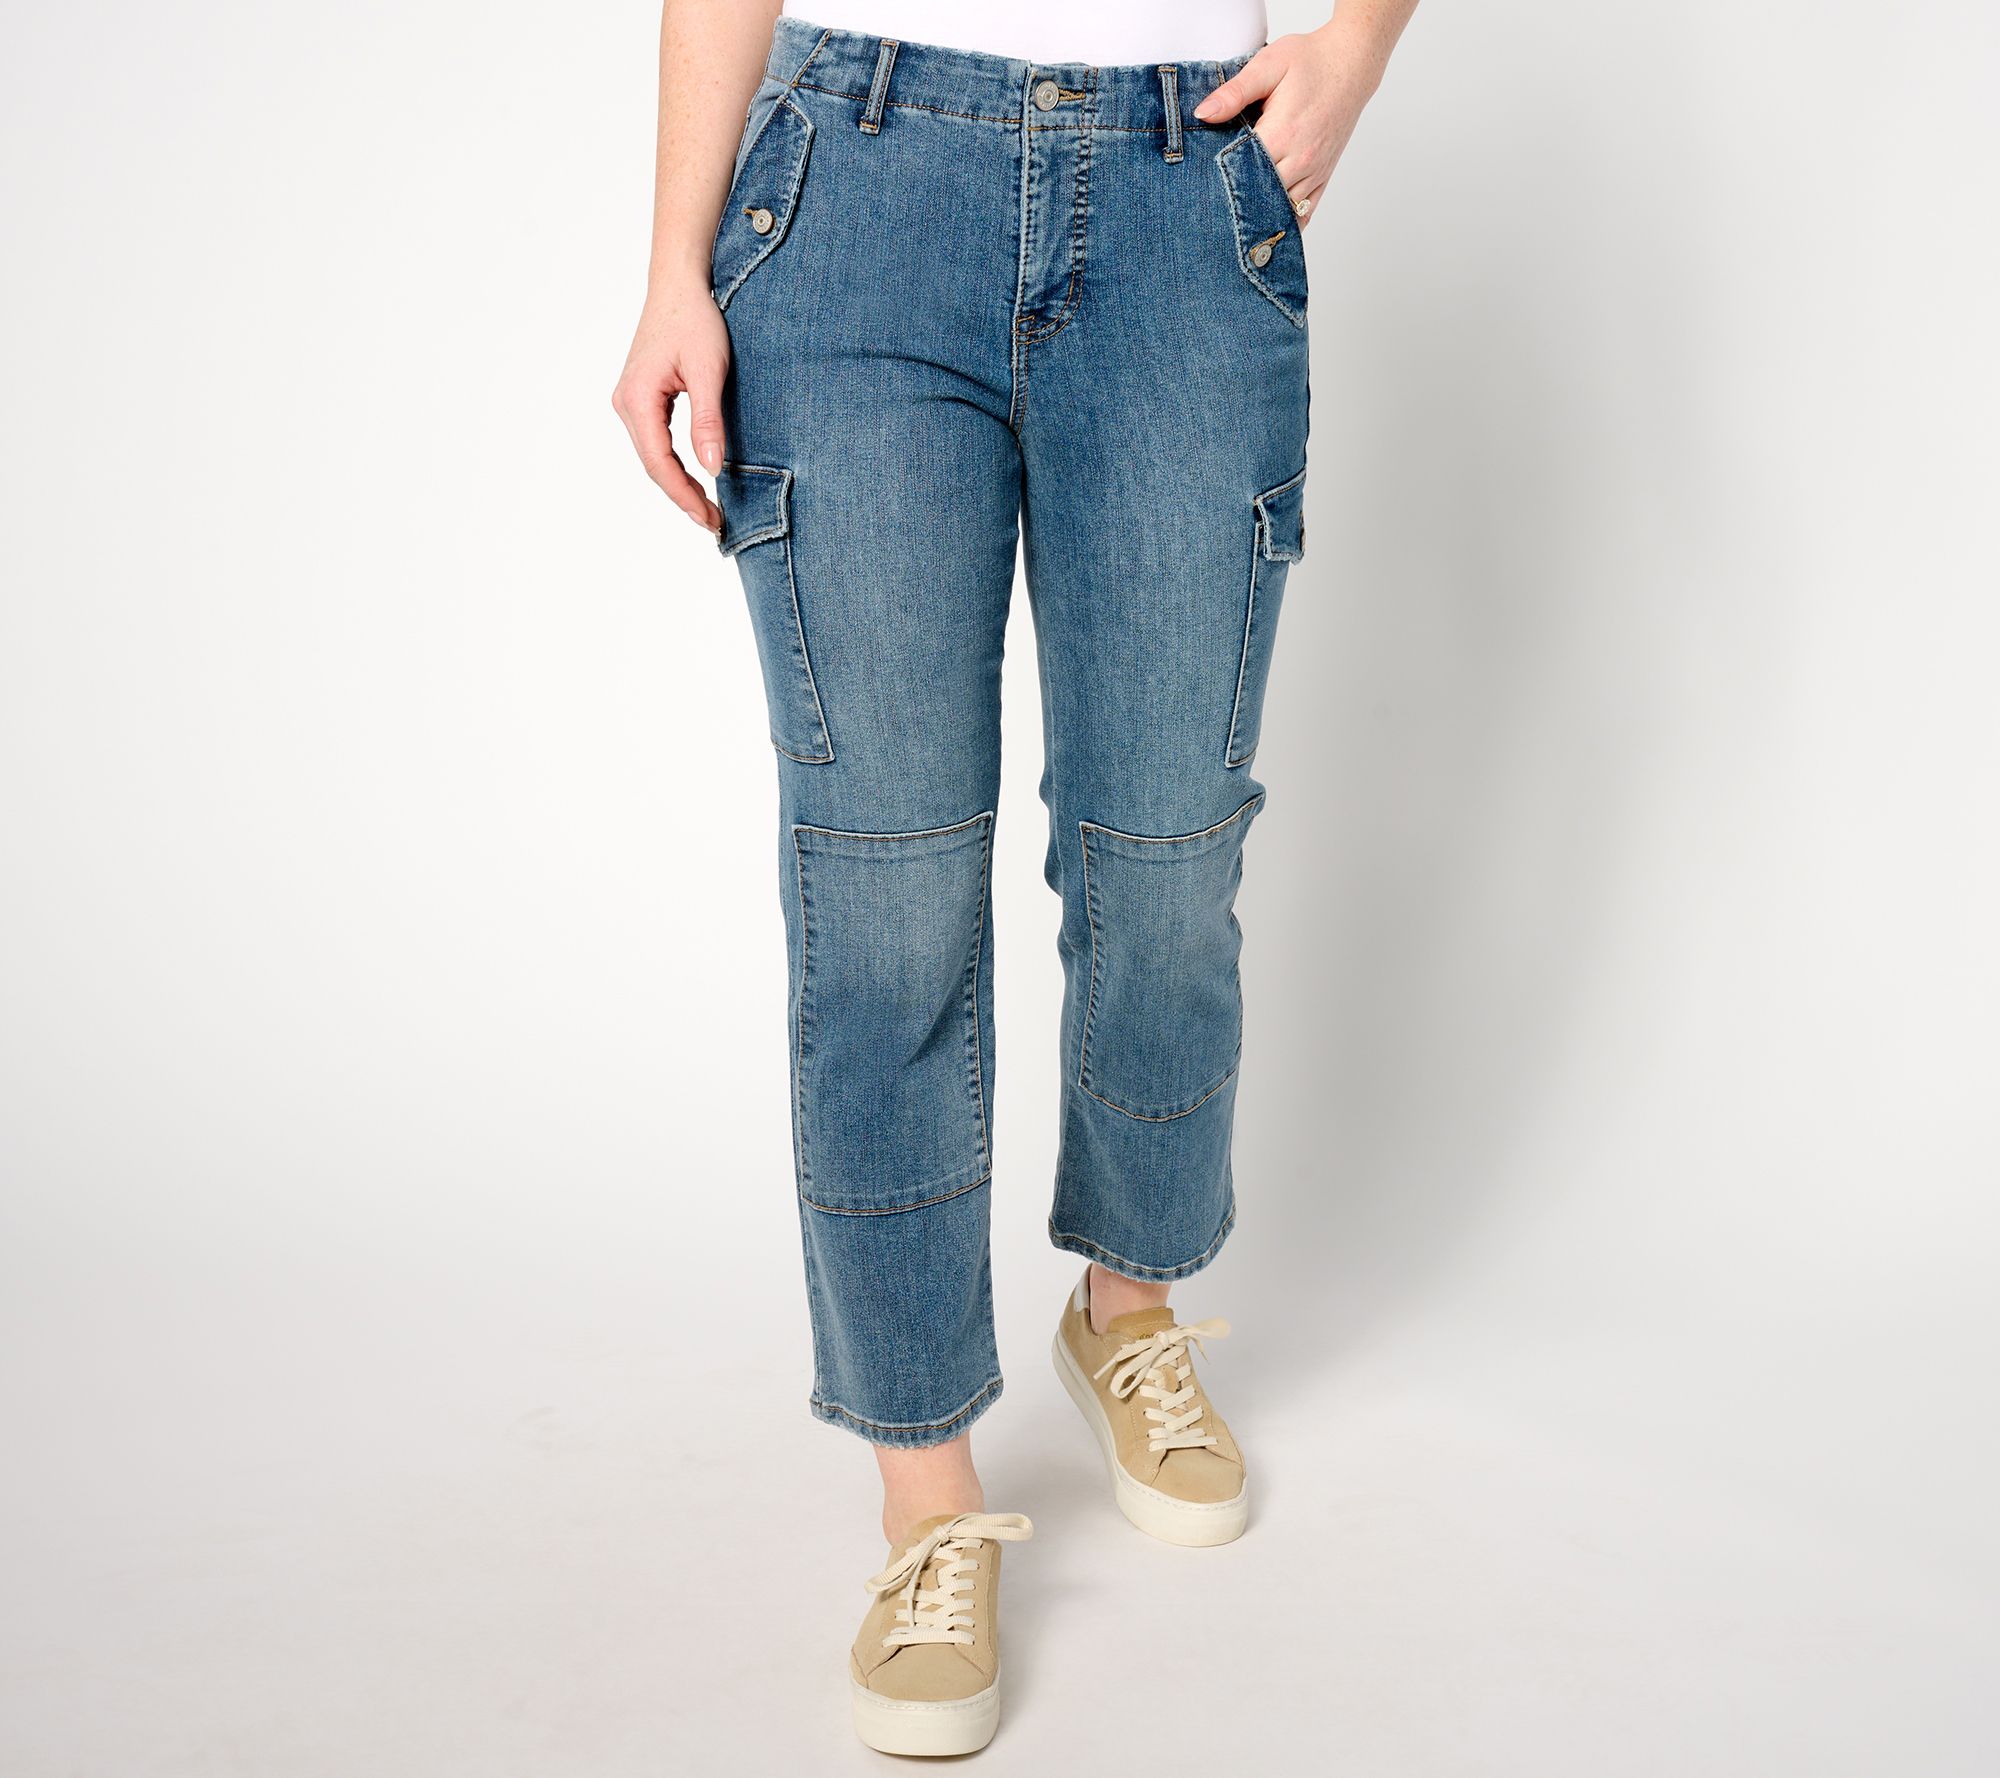 Petite Misses X-Small (2-4) - Jeans - Pants 